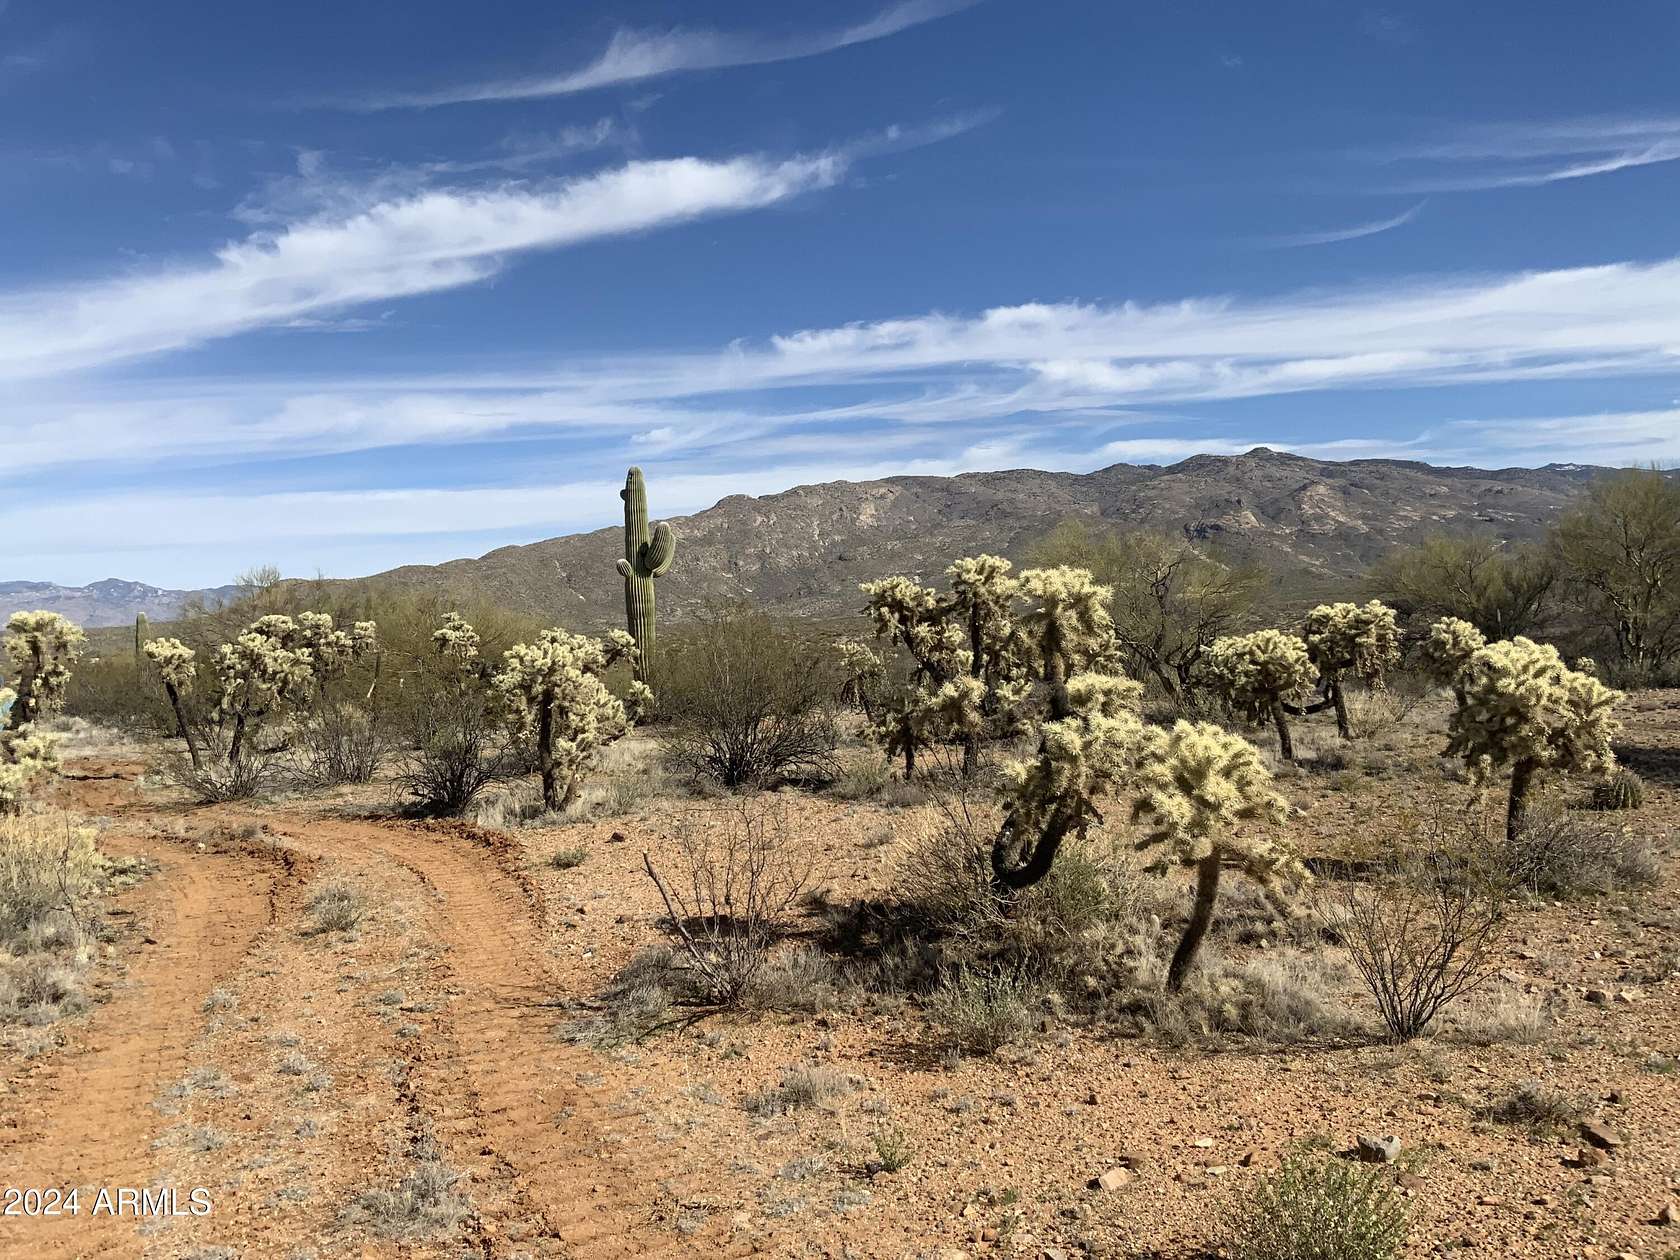 40 Acres of Land for Sale in Tucson, Arizona